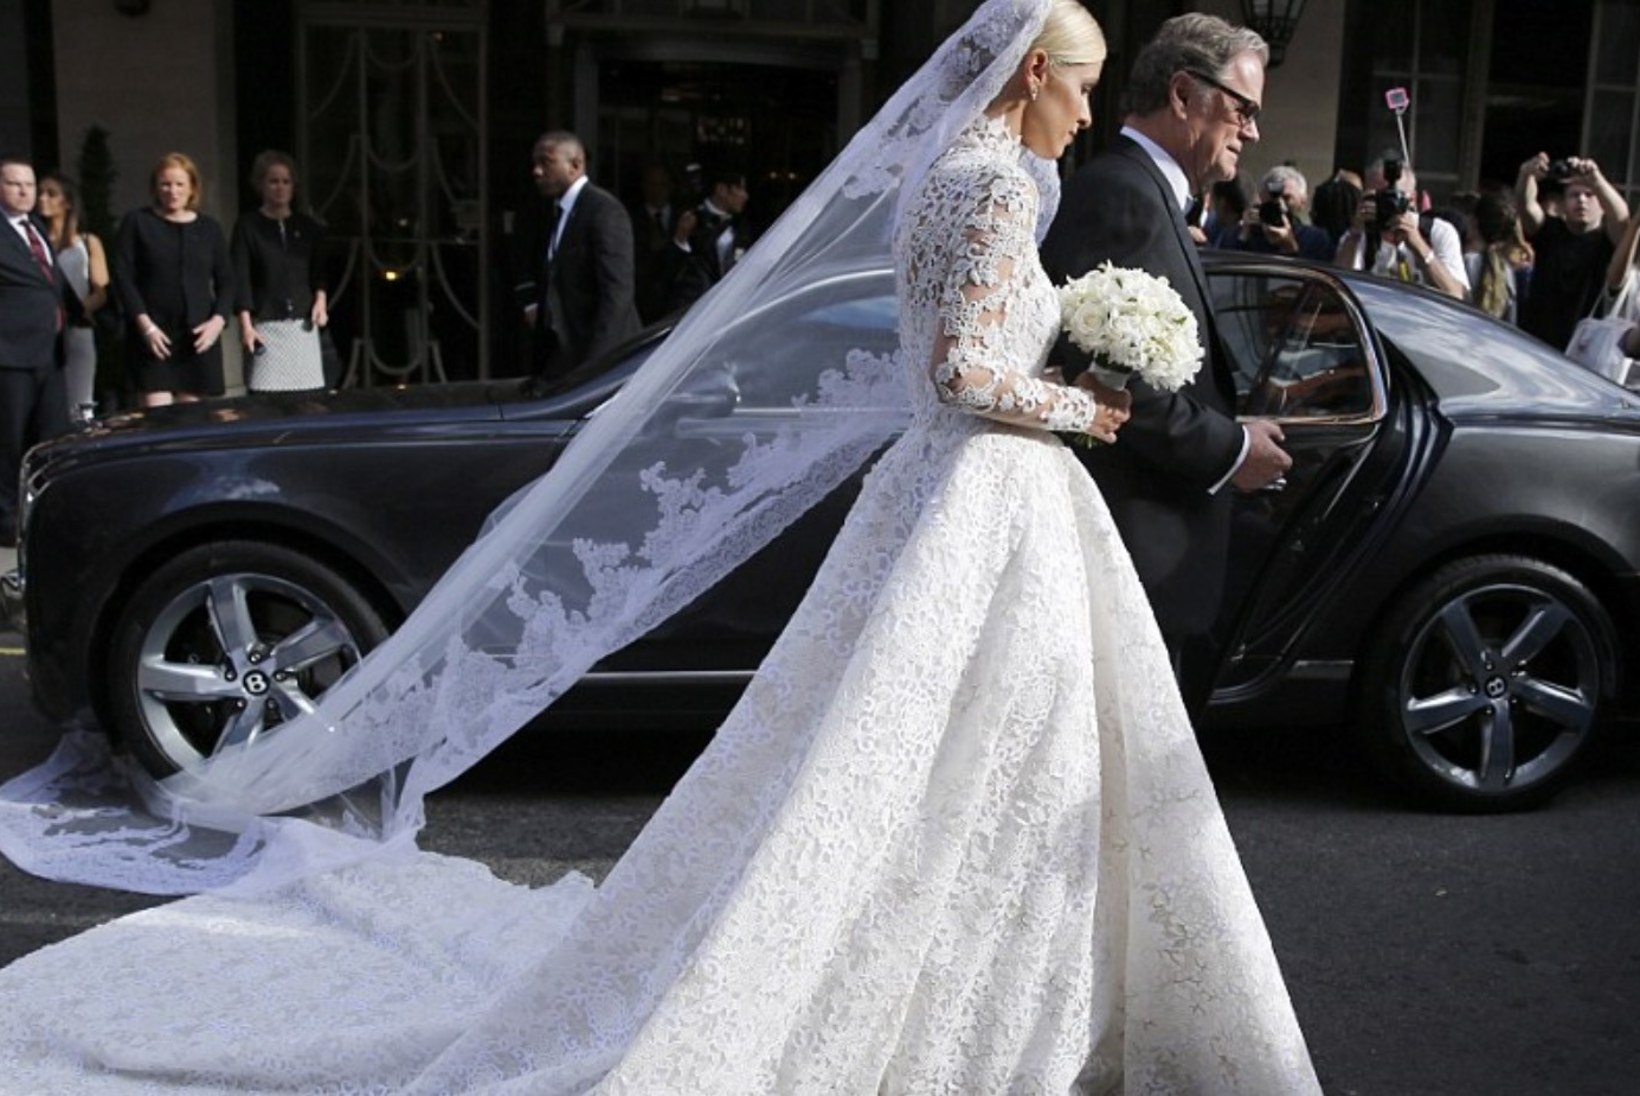 FOTOD I Paris Hiltoni õde Nicki abiellus